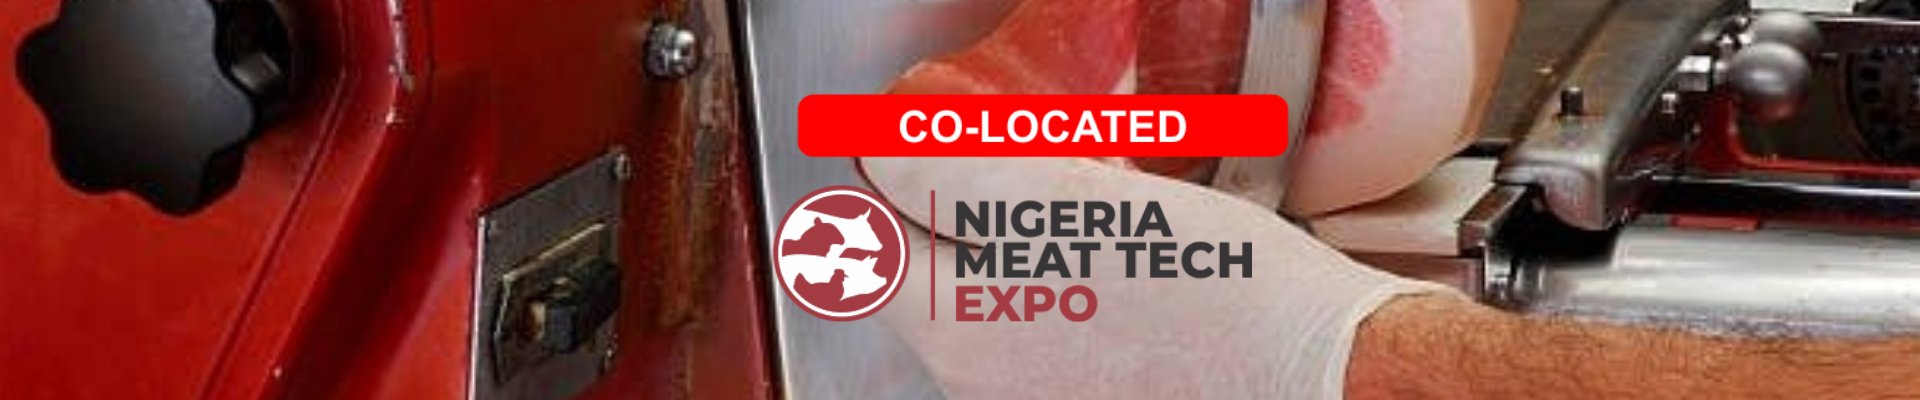 Nigeria Meat Tech Expo